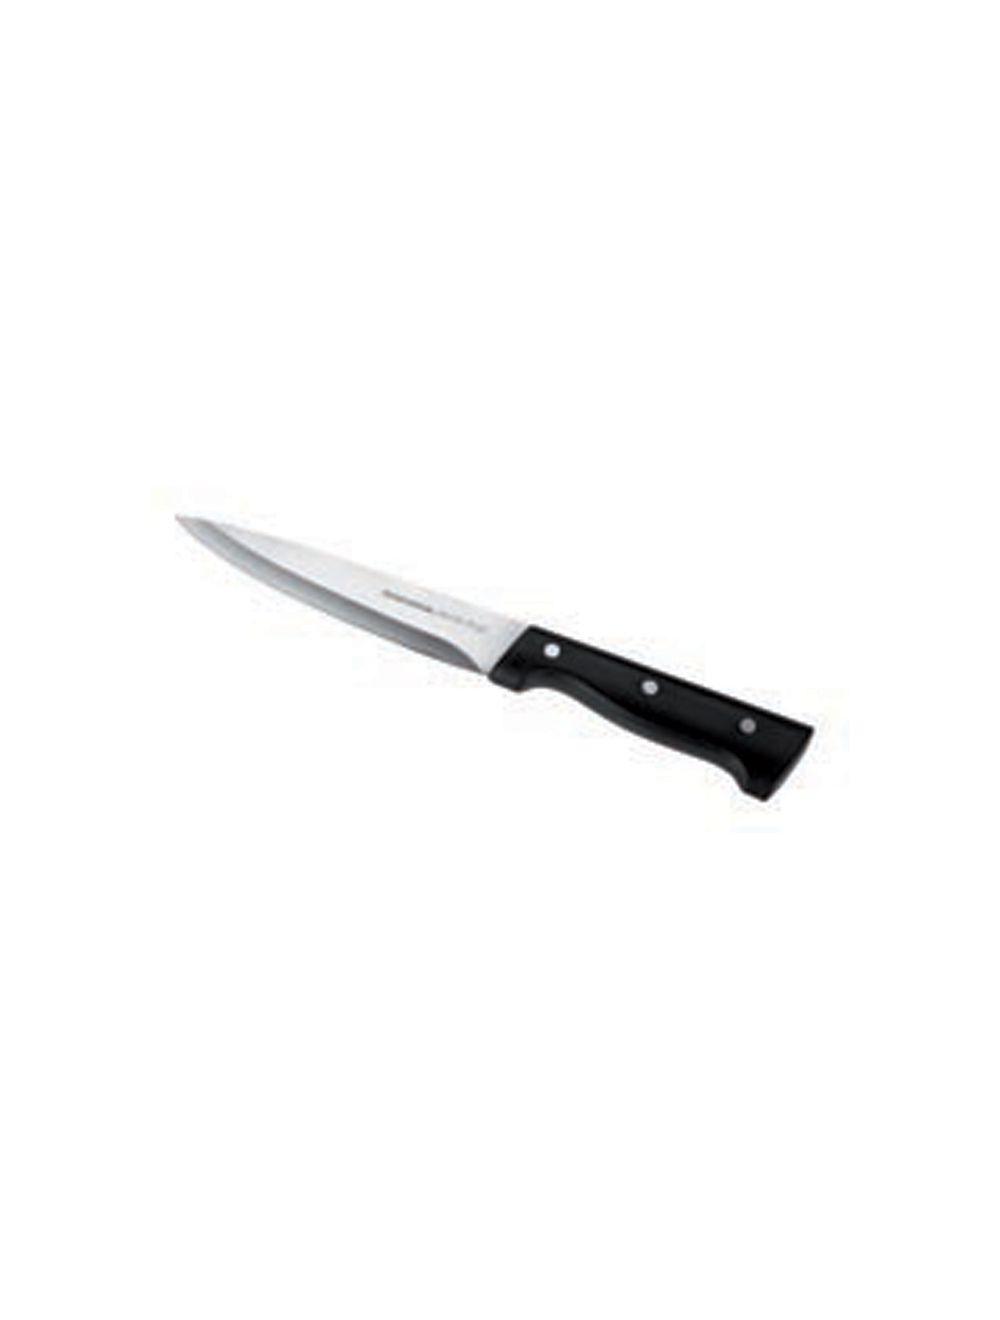 Tescoma 13 cm Utility Knife